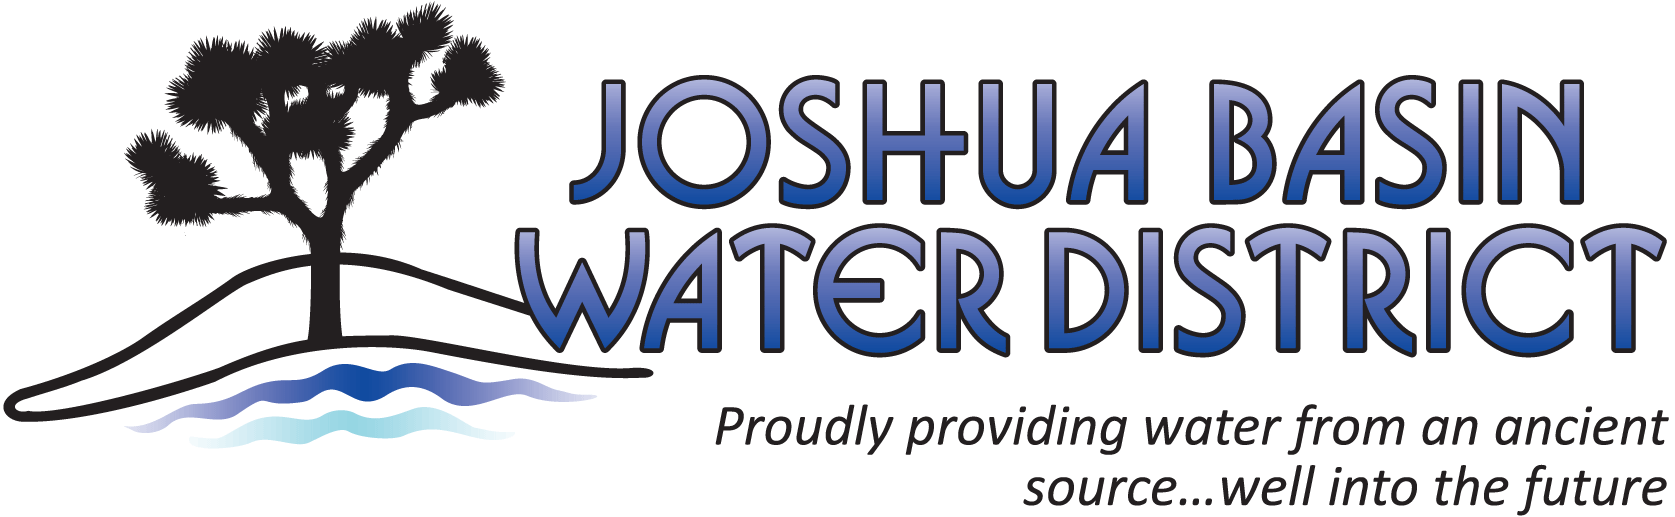 JT Water Dist Logo.png